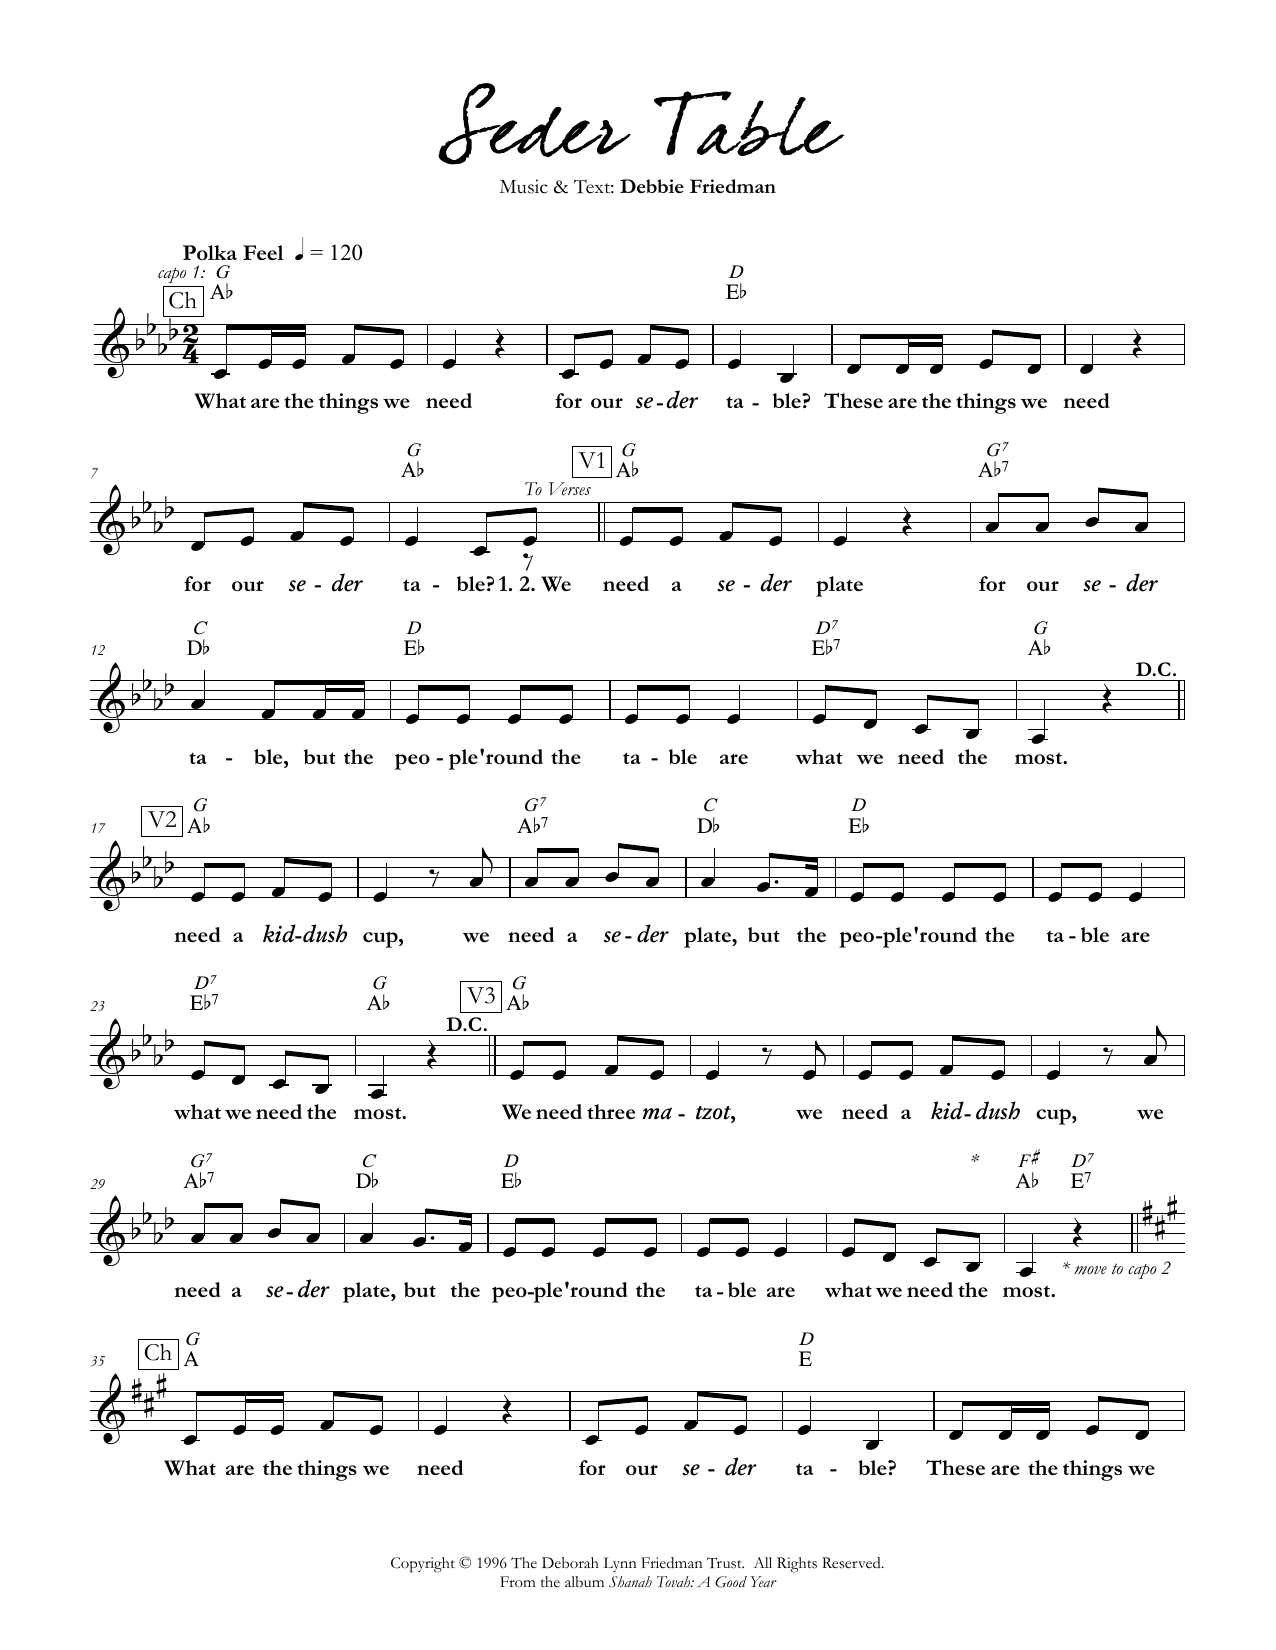 Debbie Friedman Seder Table Sheet Music Notes & Chords for Lead Sheet / Fake Book - Download or Print PDF